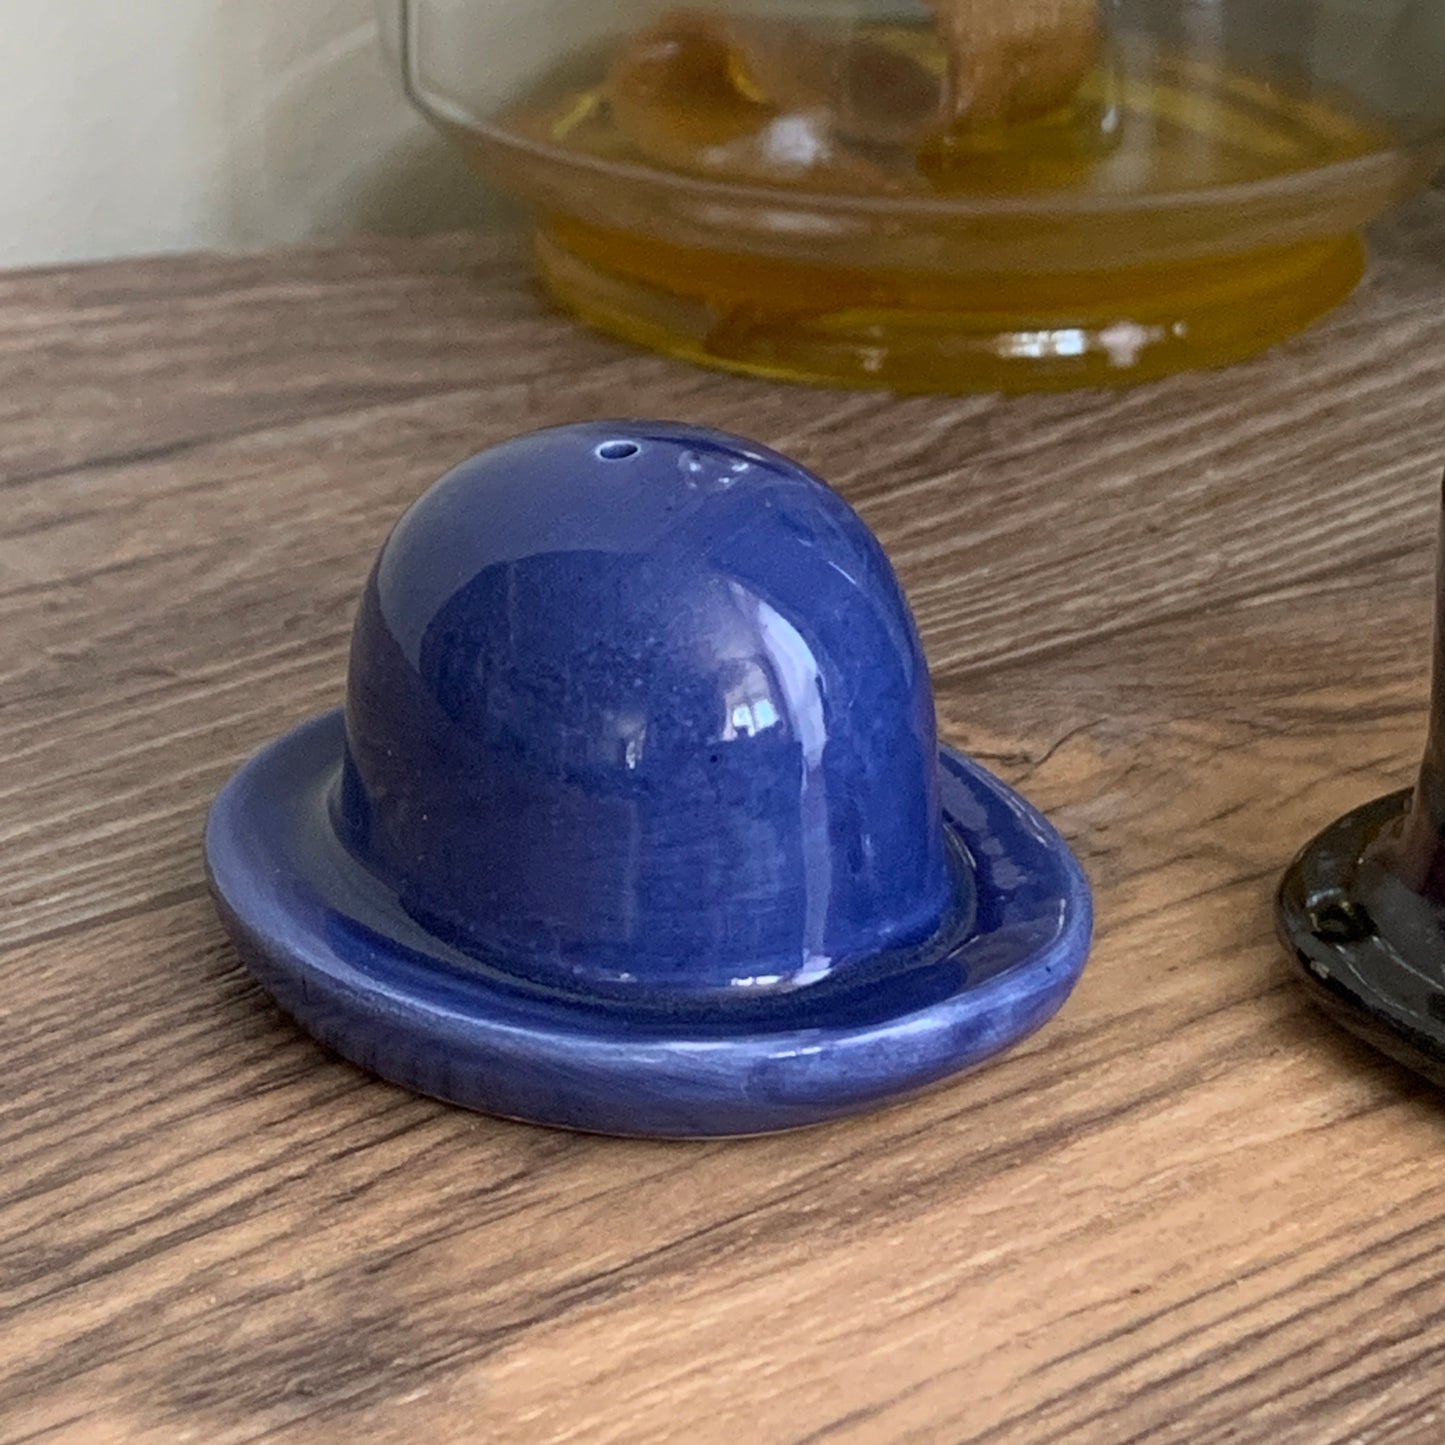 Ceramic Salt and Pepper Shakers, Top Hat and Bolero Hat